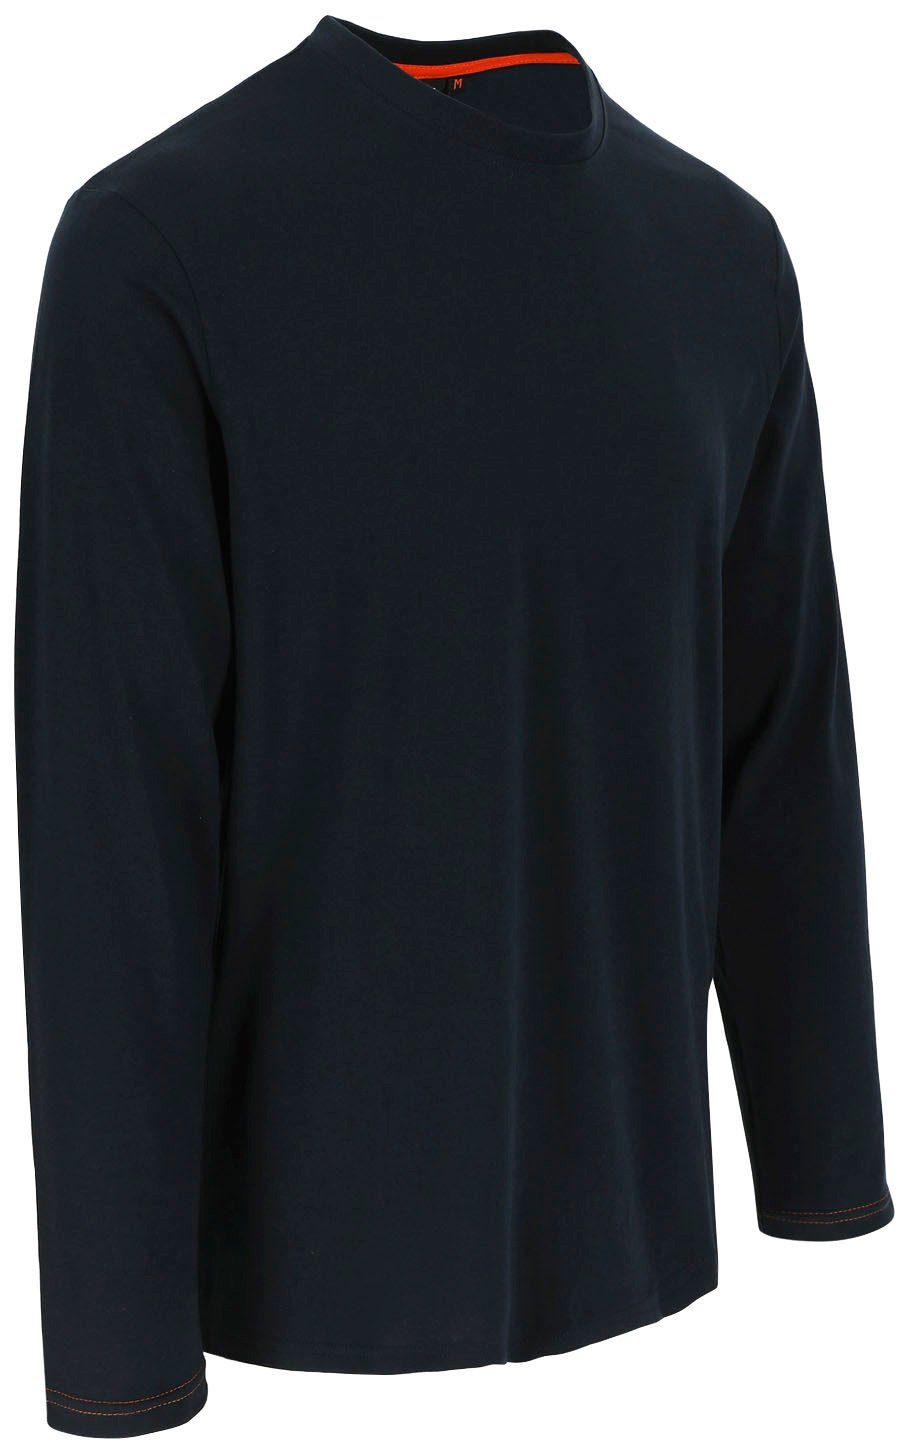 Herock Langarmshirt Noet t-shirt langärmlig 100 % Baumwolle, Tragegefühl, marine vorgeschrumpfte angenehmes Basic